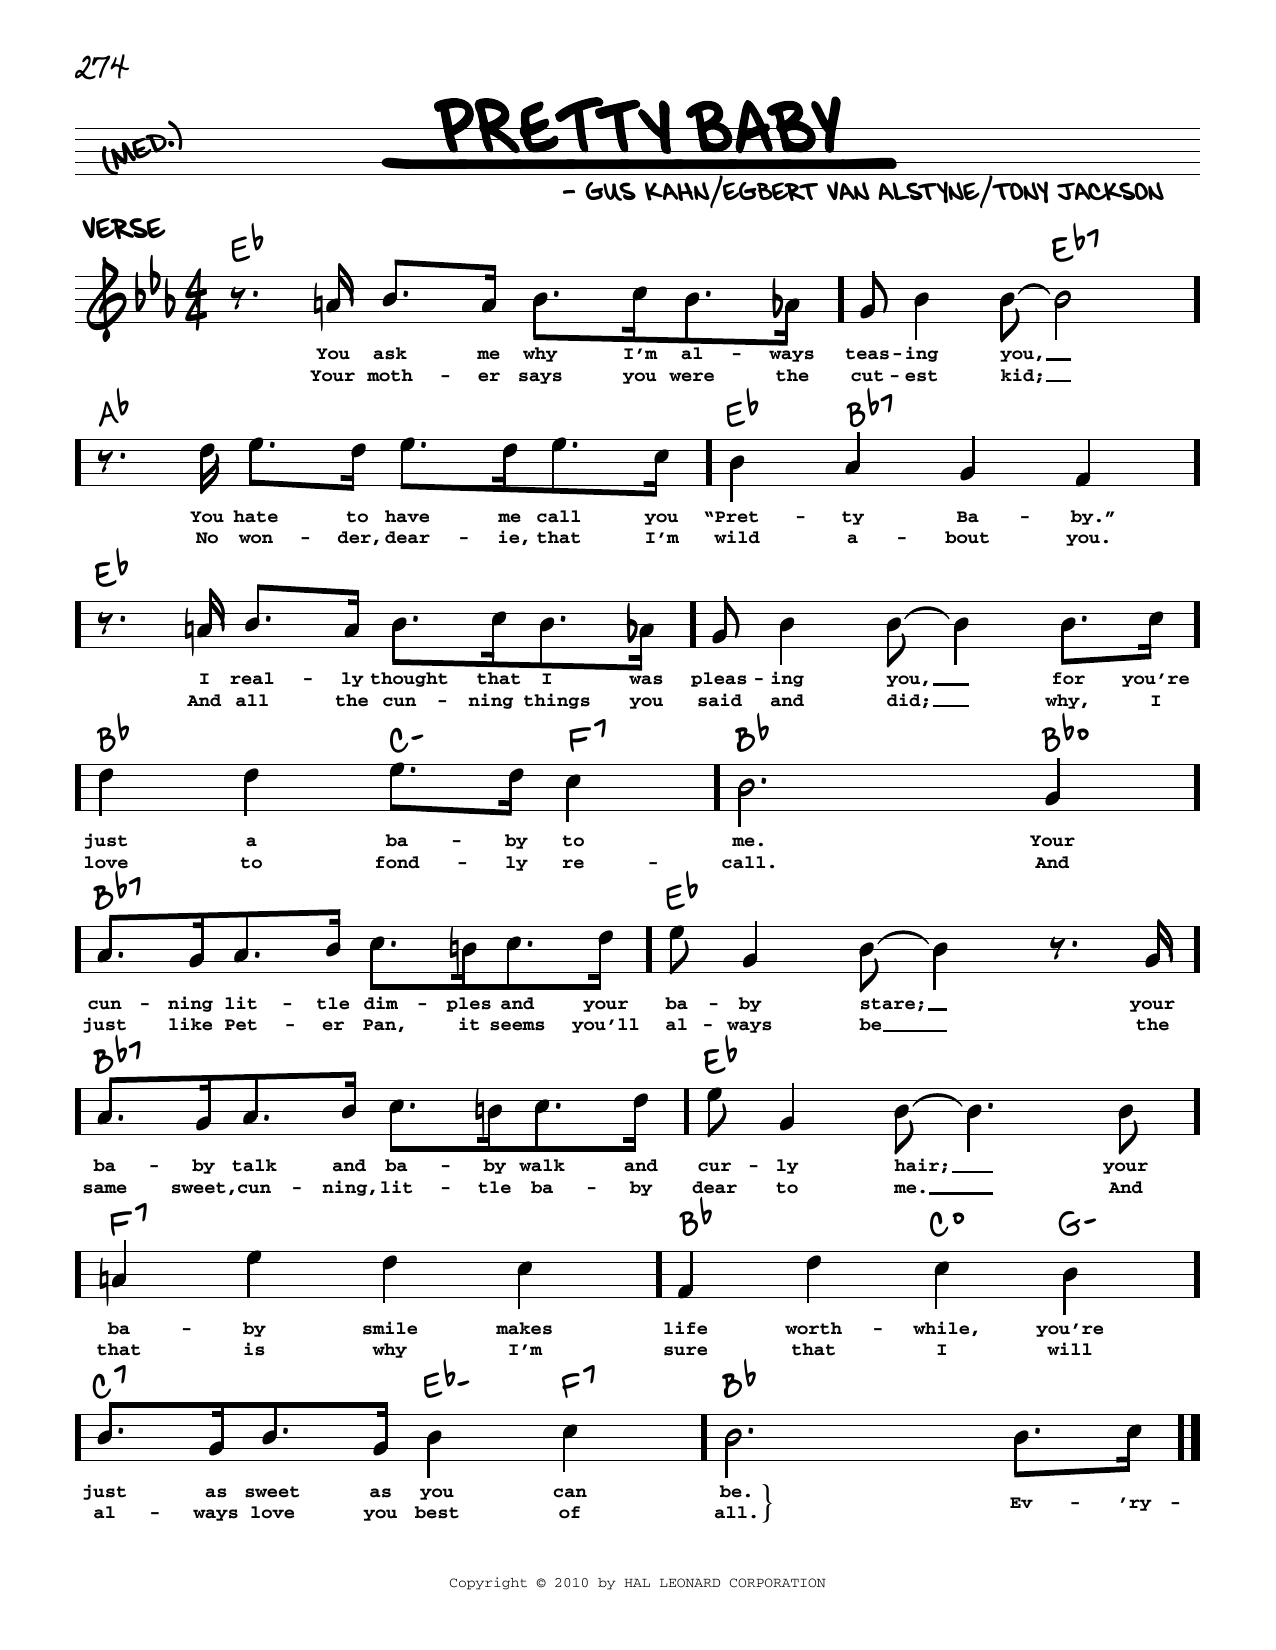 Gus Kahn Pretty Baby Sheet Music Notes & Chords for Real Book – Melody, Lyrics & Chords - Download or Print PDF